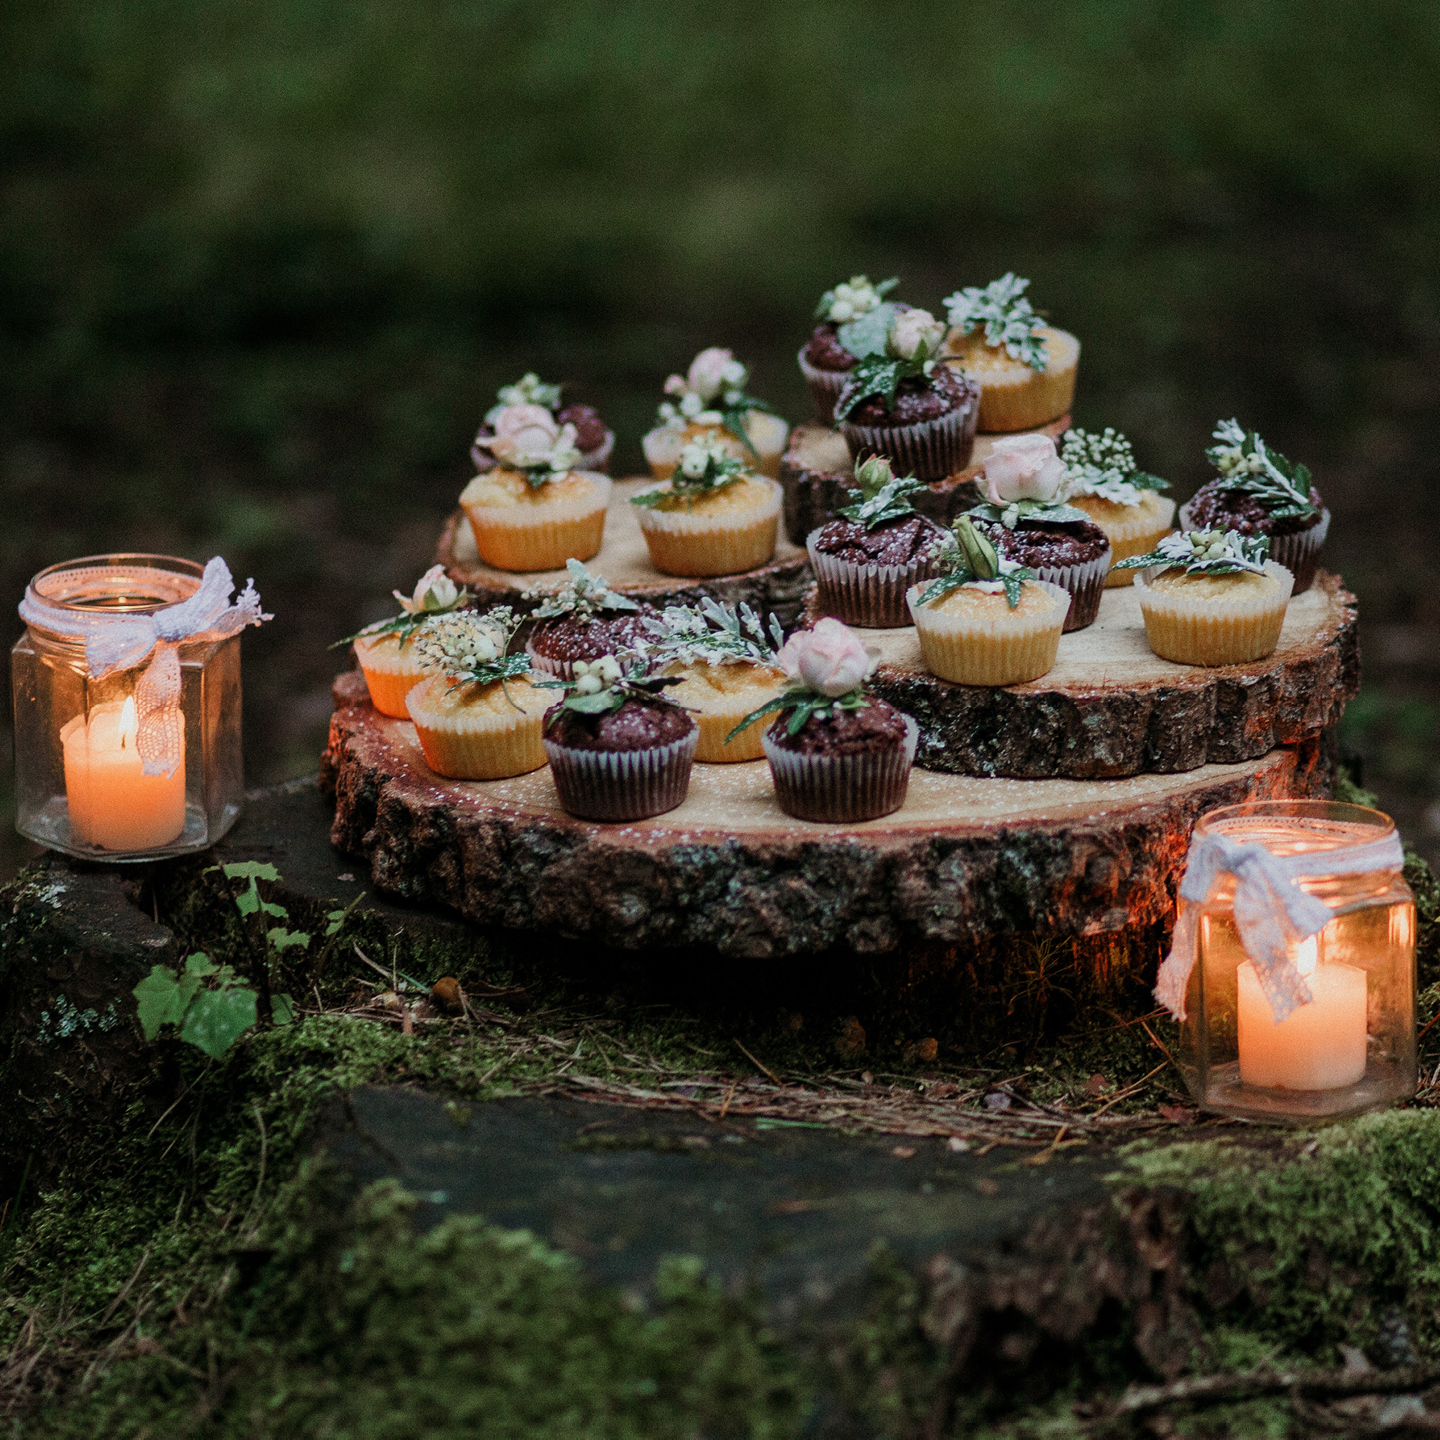 couple unique alternatives to wedding cakes